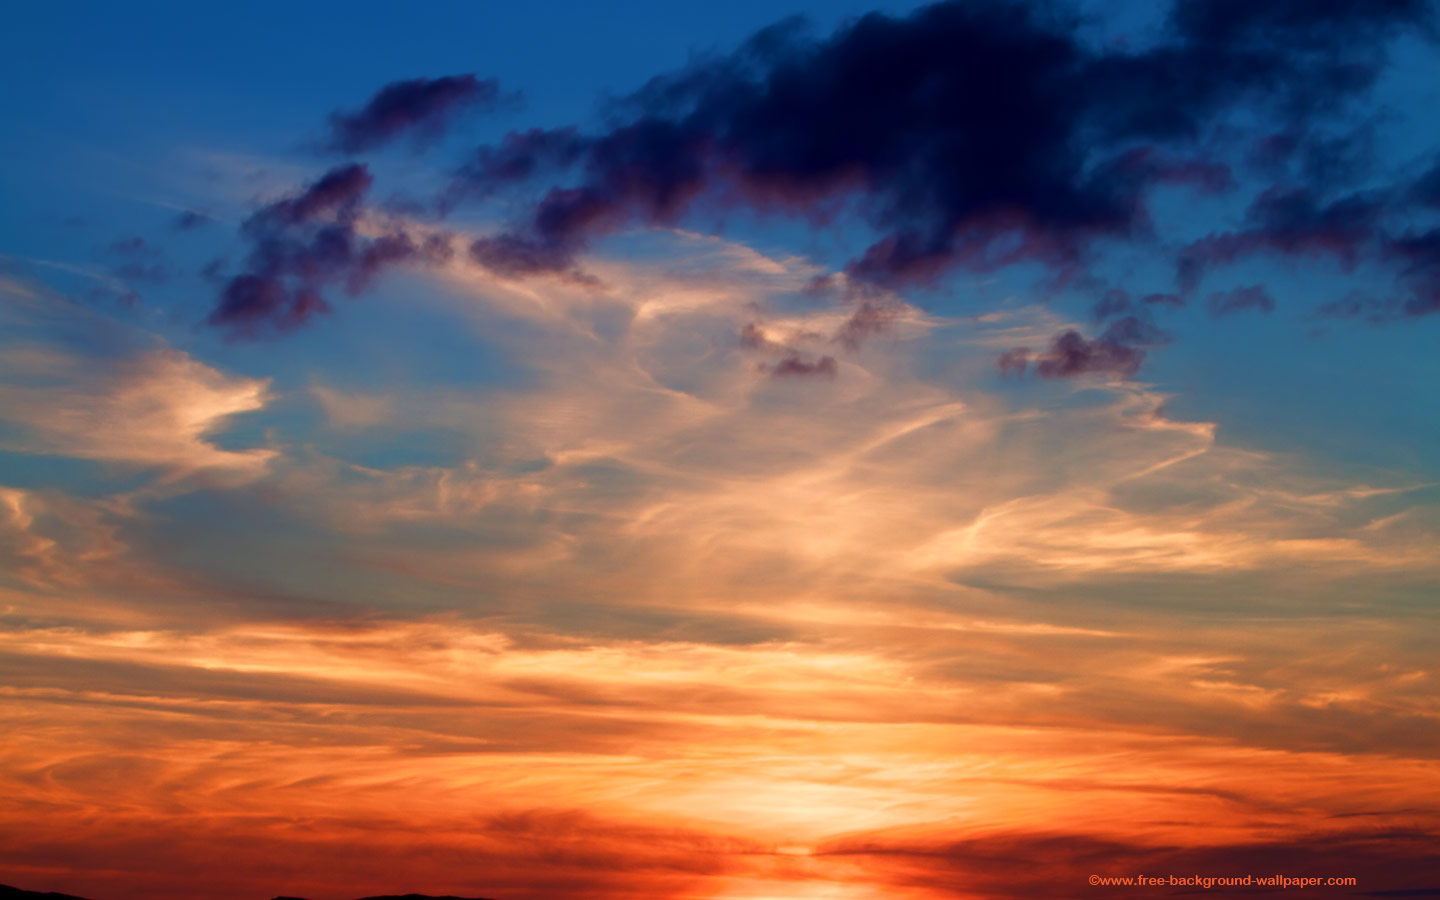 Sunset Sky in Scotland   Sky Background Wallpaper   1440x900 pixels